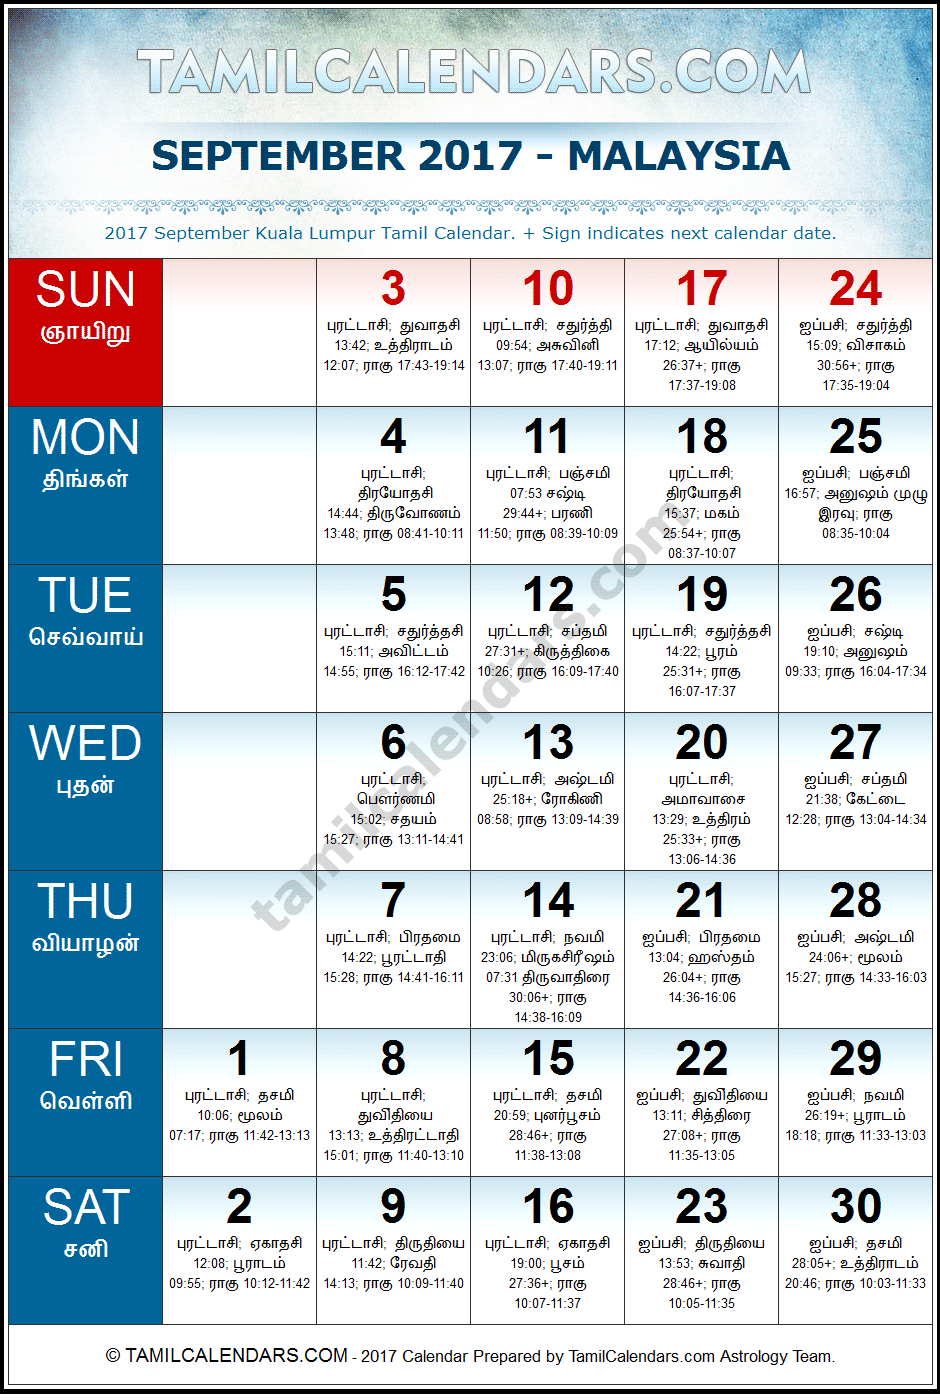 September 2017 Tamil Calendar for Malaysia (Kuala Lumpur)